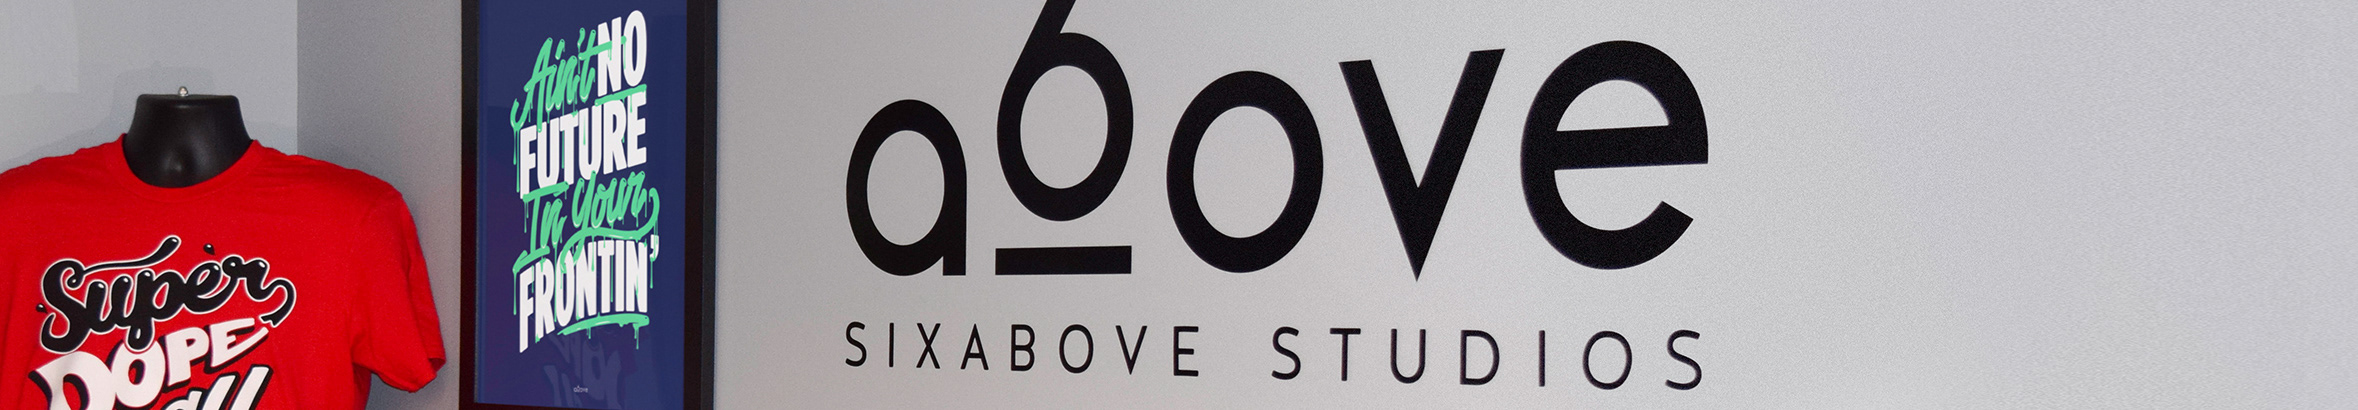 SixAbove Studios's profile banner